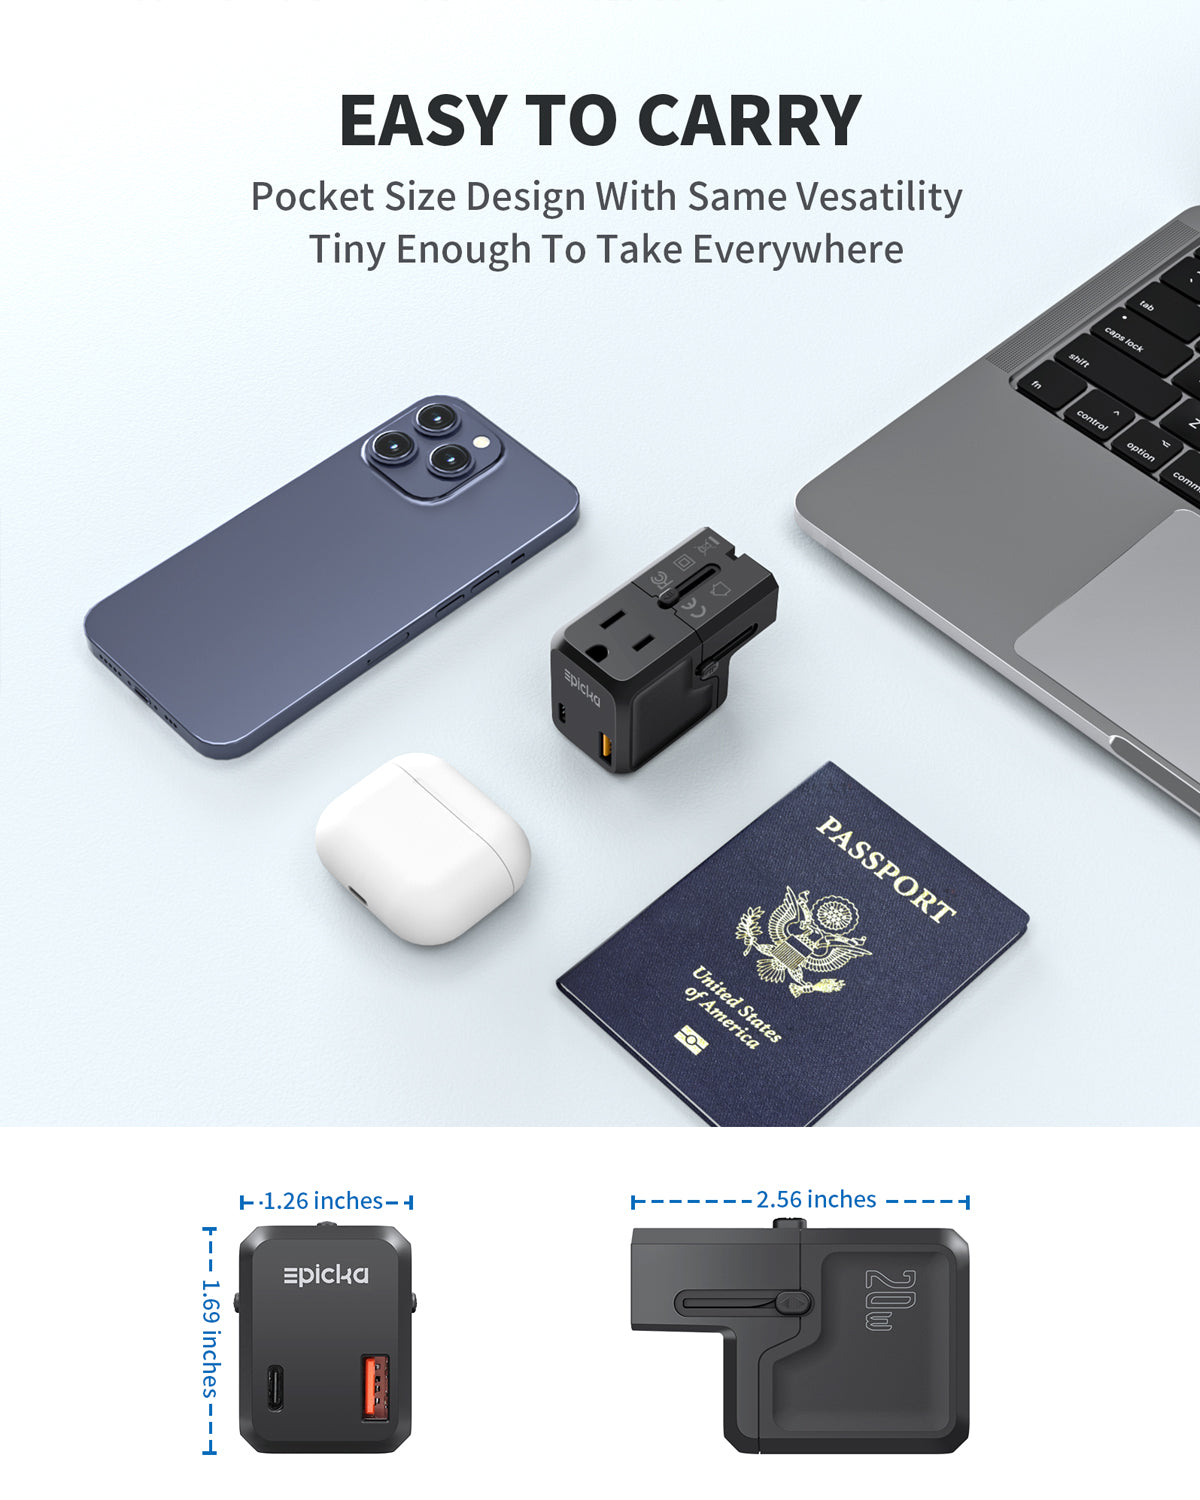 Pocket 111 Universal Travel Adapter